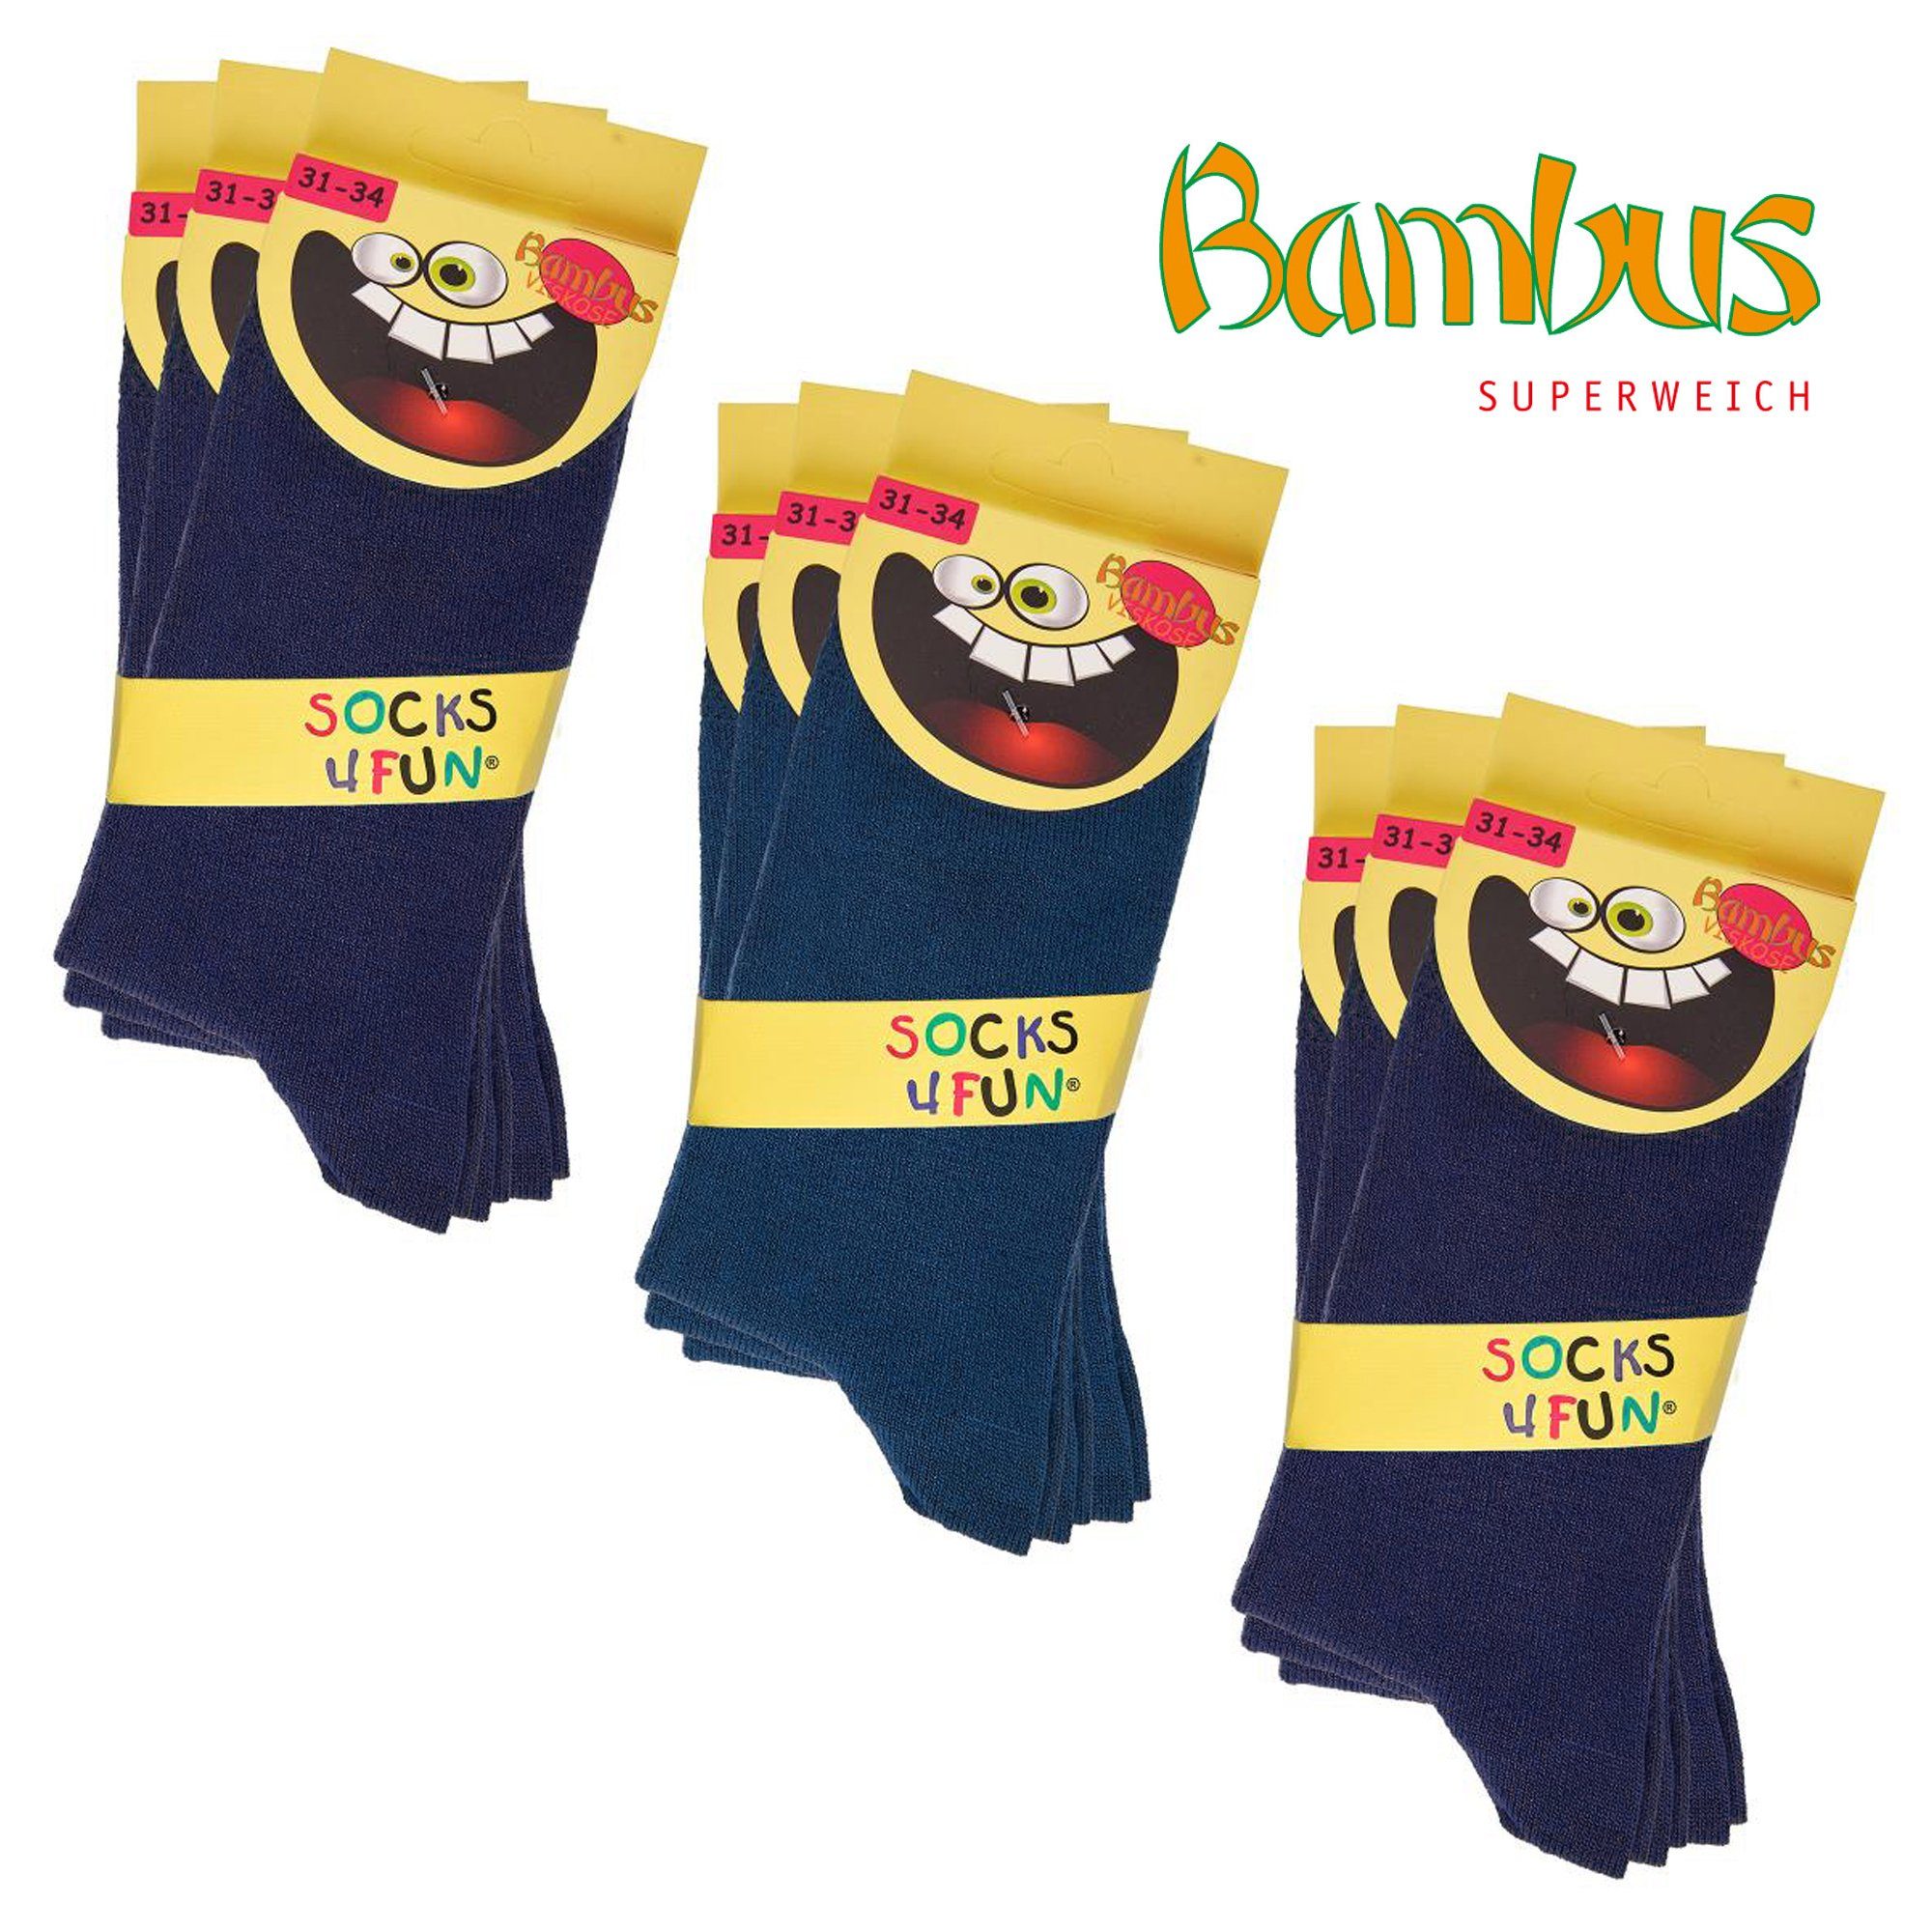 Socks 4 Fun Langsocken 3170 (Packung, 9-Paar, 9 Paar) unifarbene Kinder Socken, Jungen & Mädchen, Kindersocken marine+jeans+marine